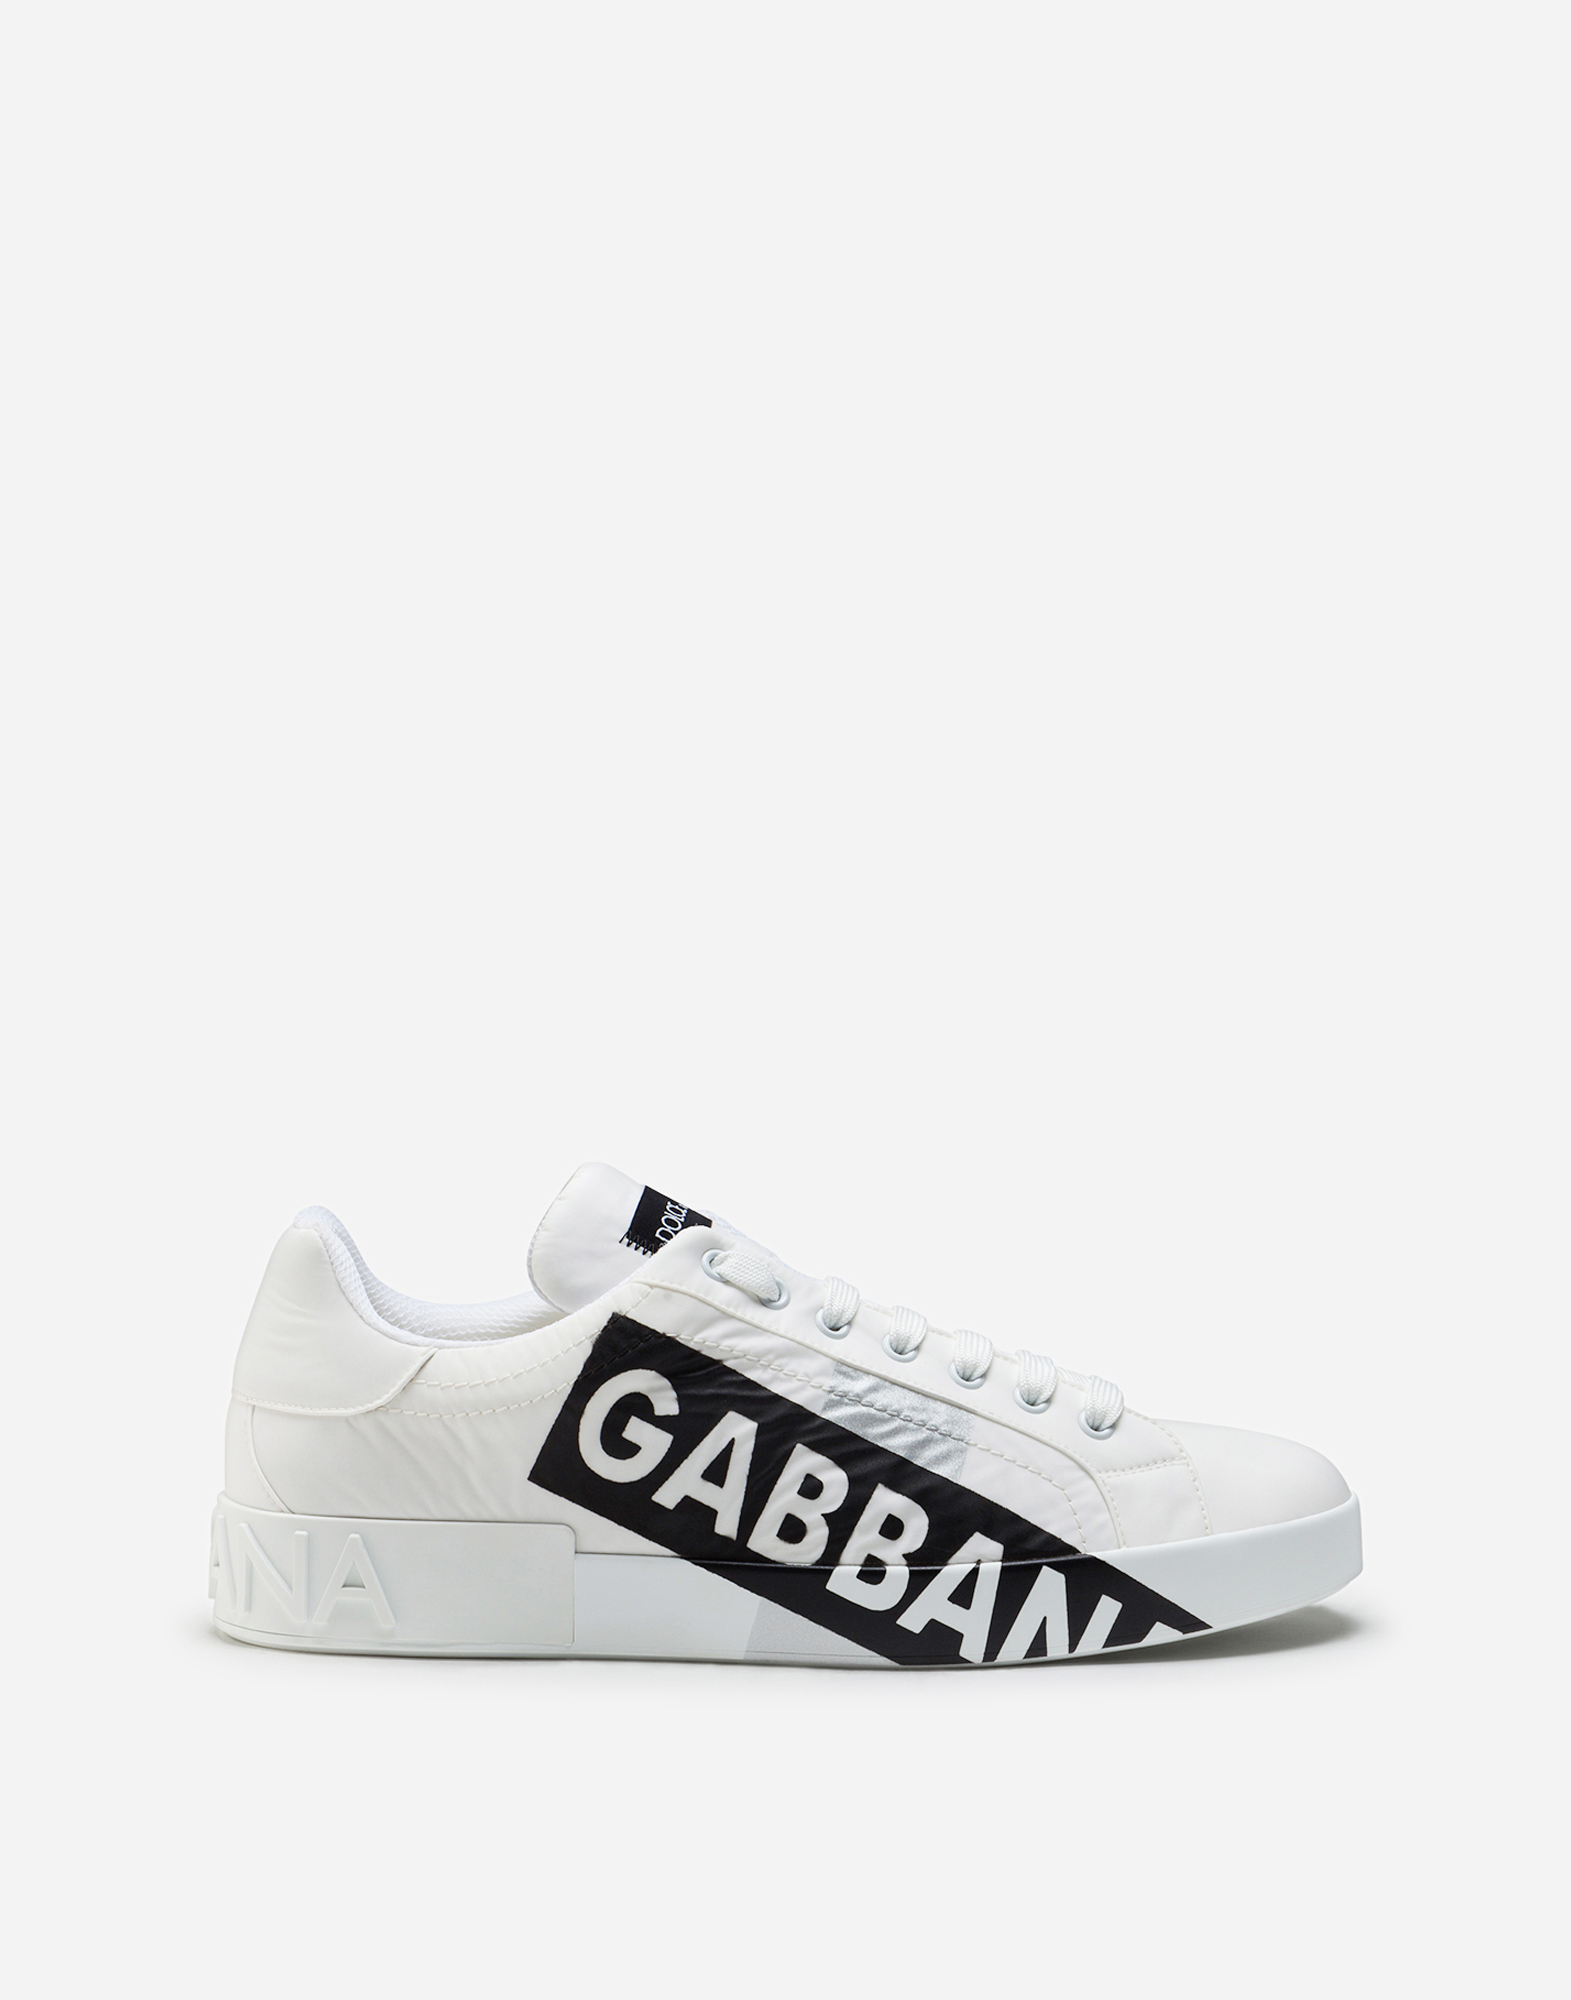 dolce gabbana shoes white